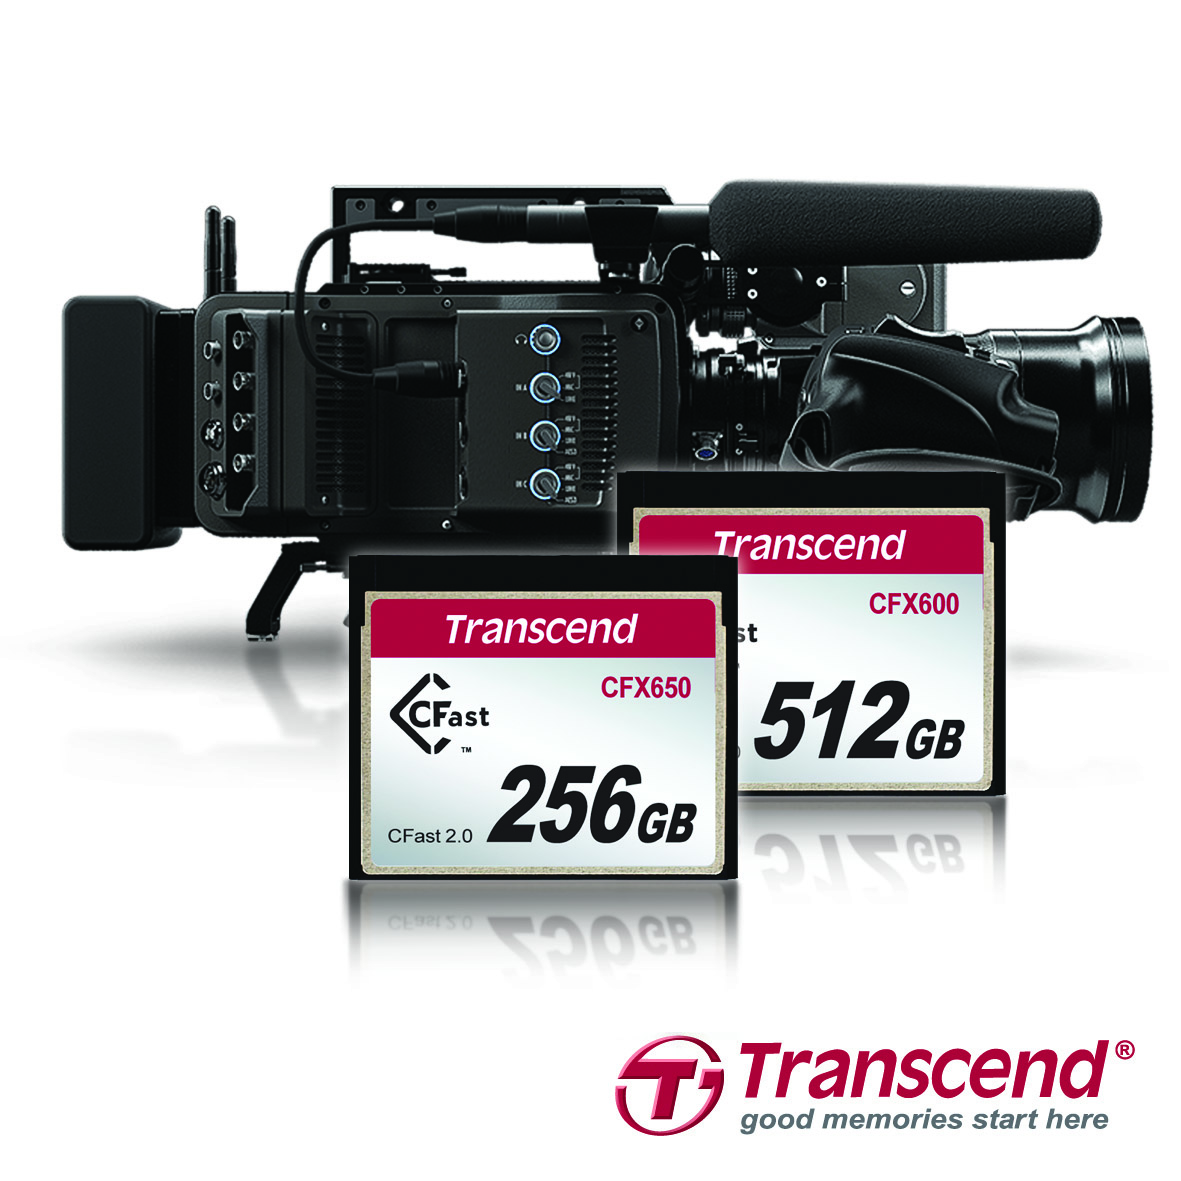 Transcend-CFX650.jpg